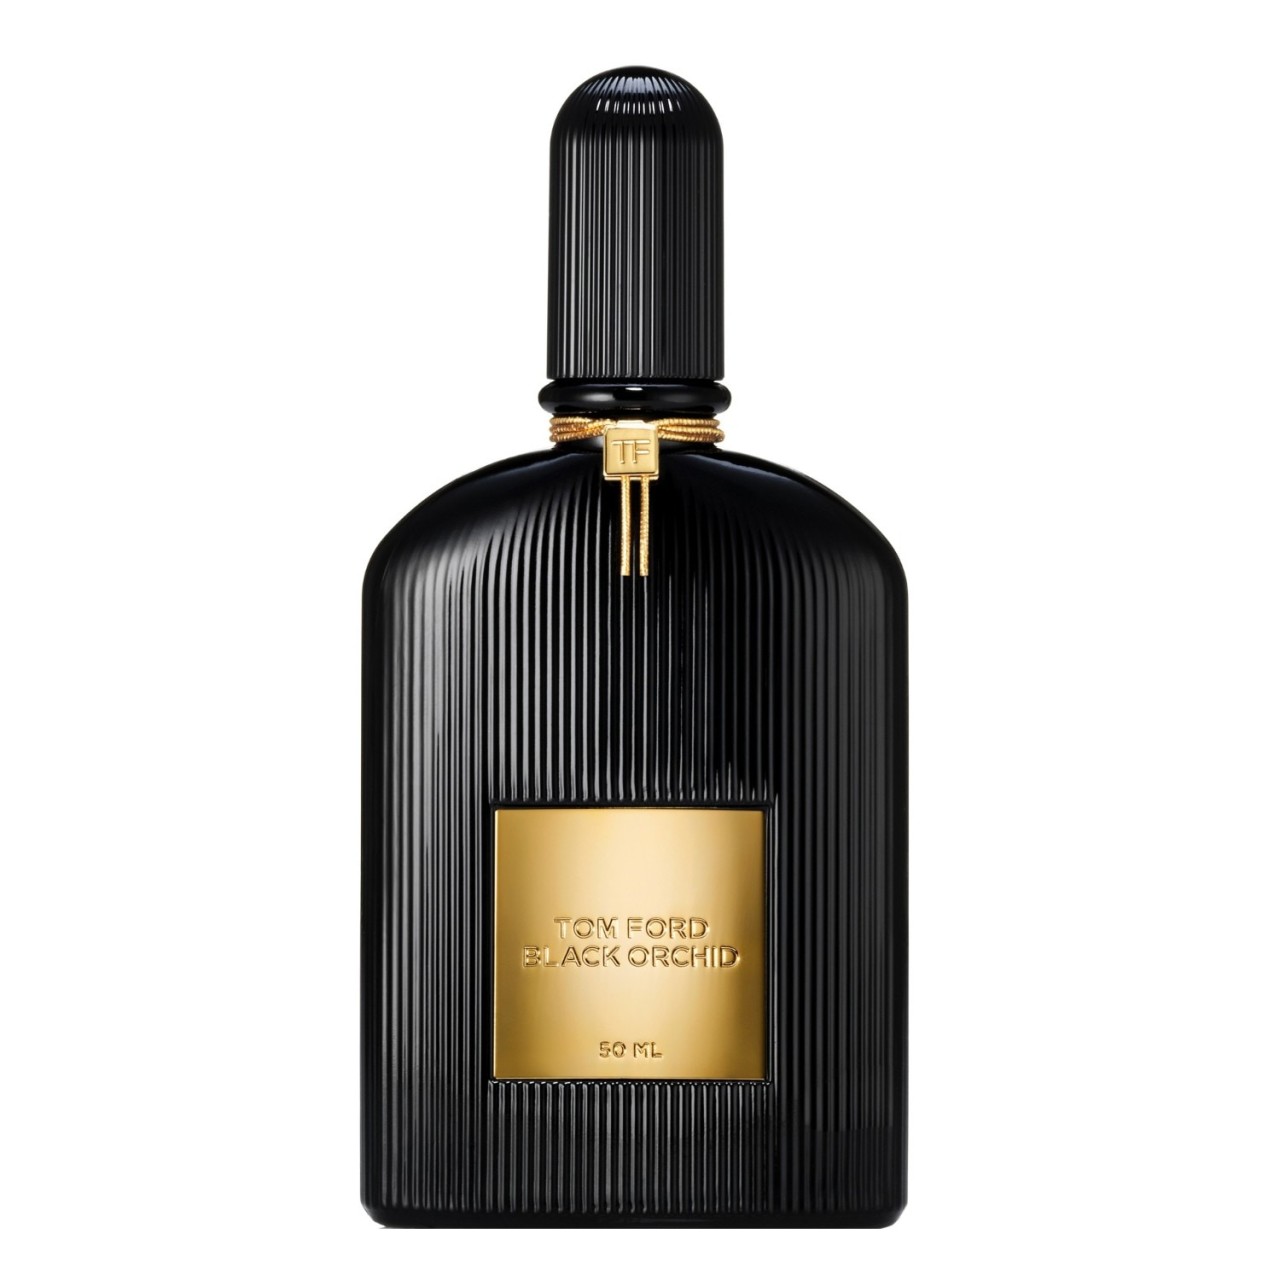 Tom Ford - Black Orchid Eau de Parfum Spray - 50 ml